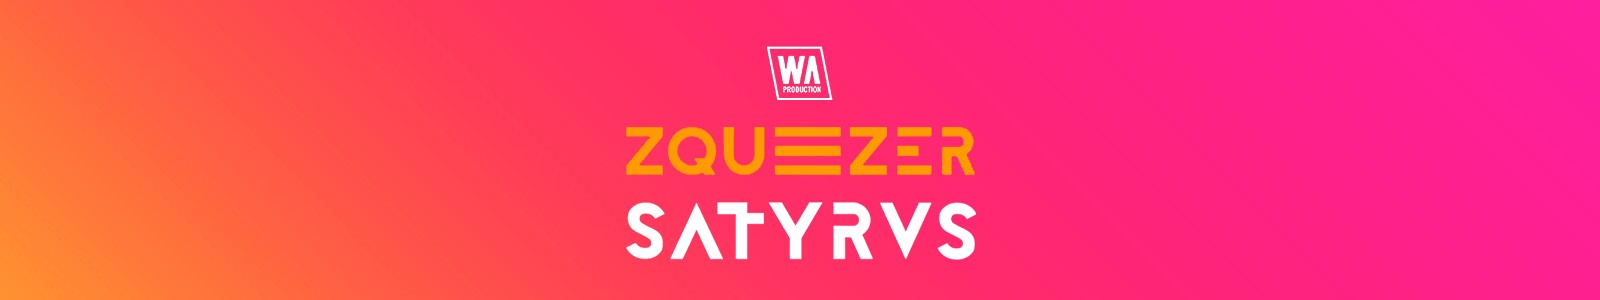 WA Production Zqueezer + Satyrus Bundle